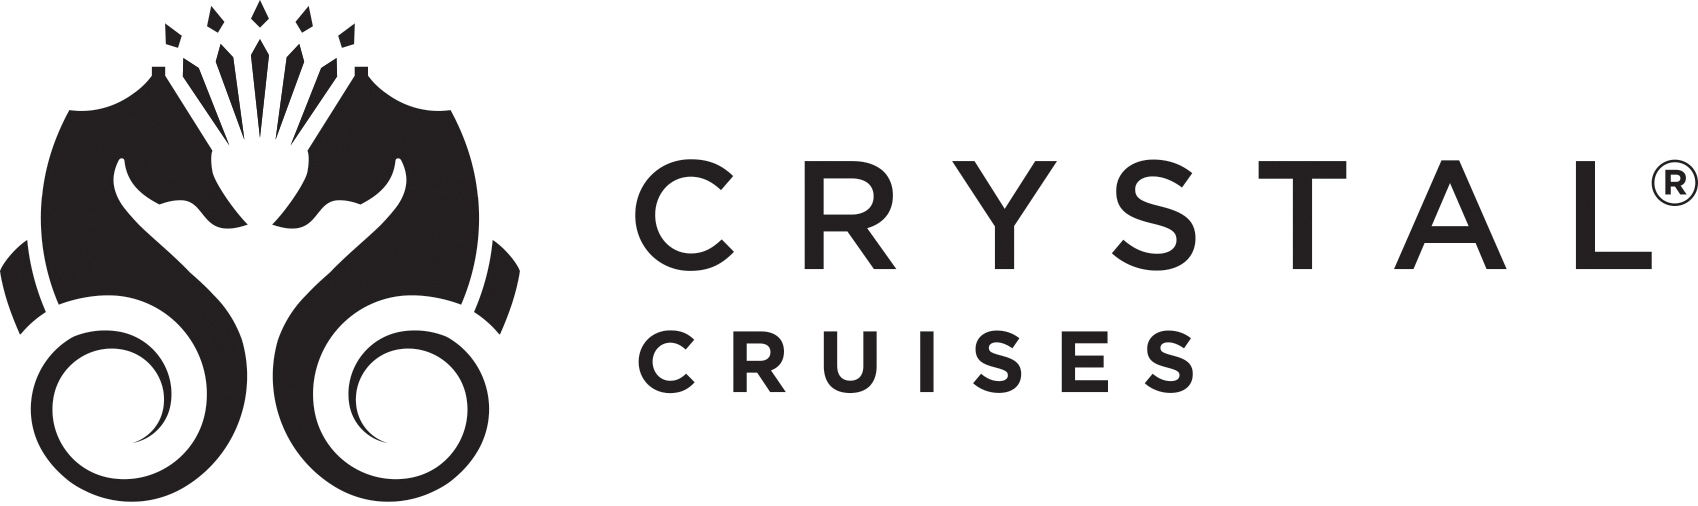 Crystal_Cruises_2016_ Logo_(Horizontal).jpg